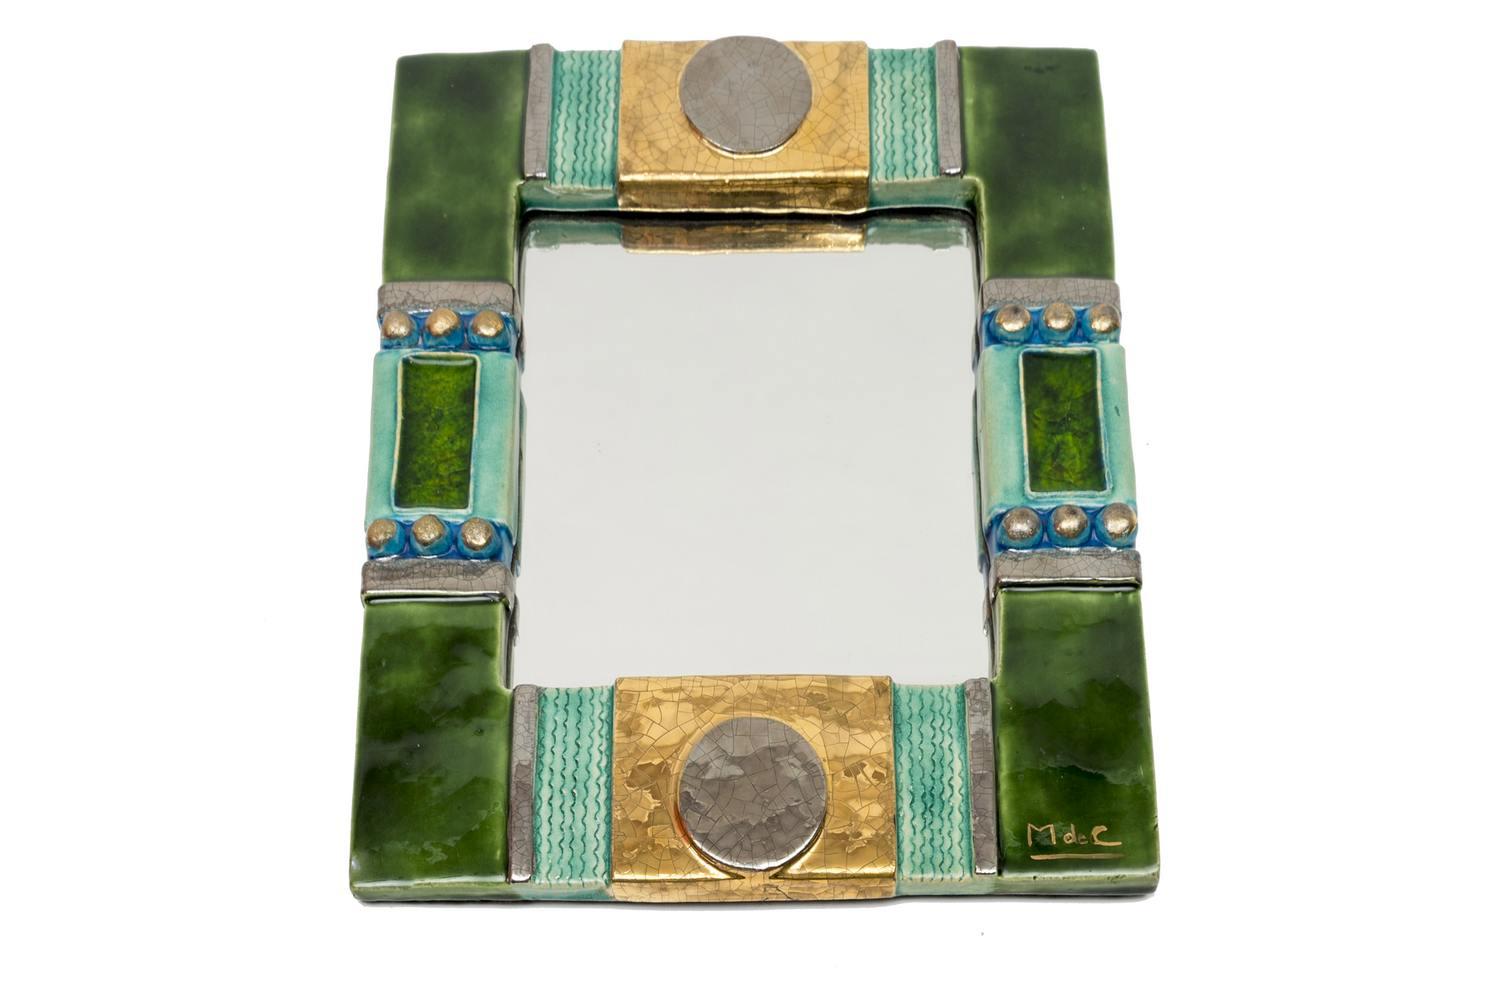 Very nice enamelled ceramic rectangular mirror.
Signed on the bottom right 